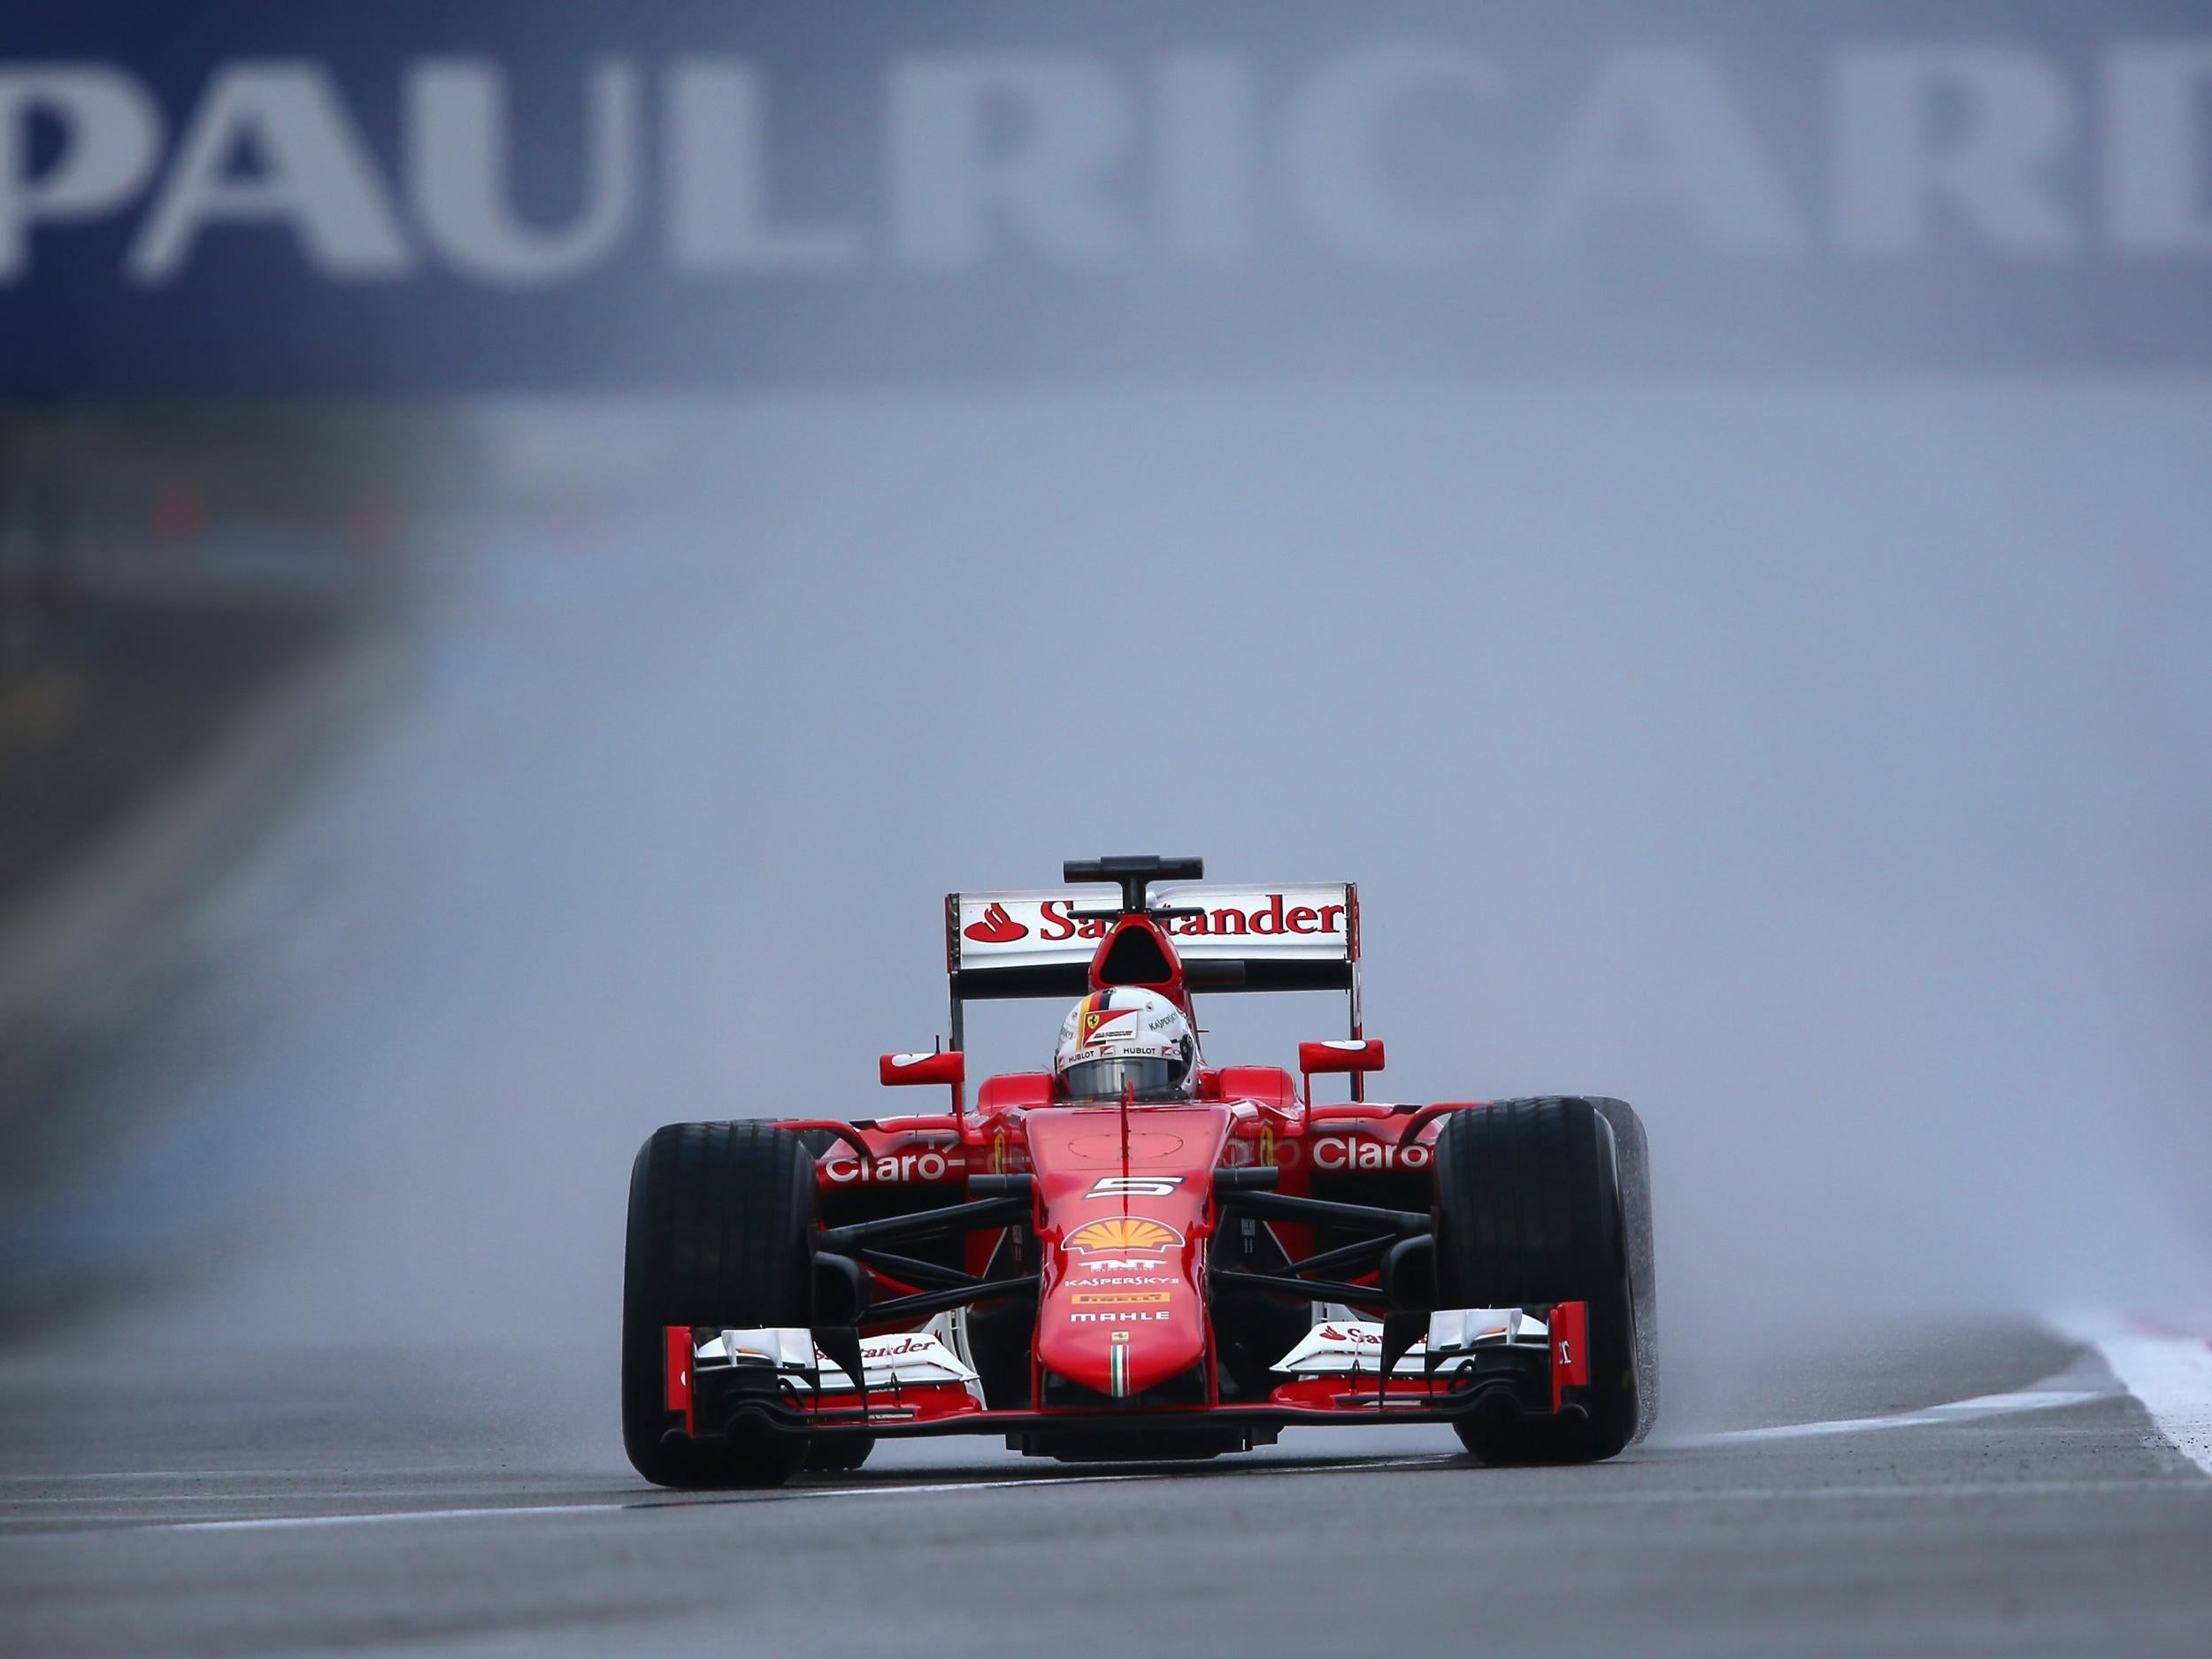 The Circuit Paul Ricard held F1 testing earlier this year